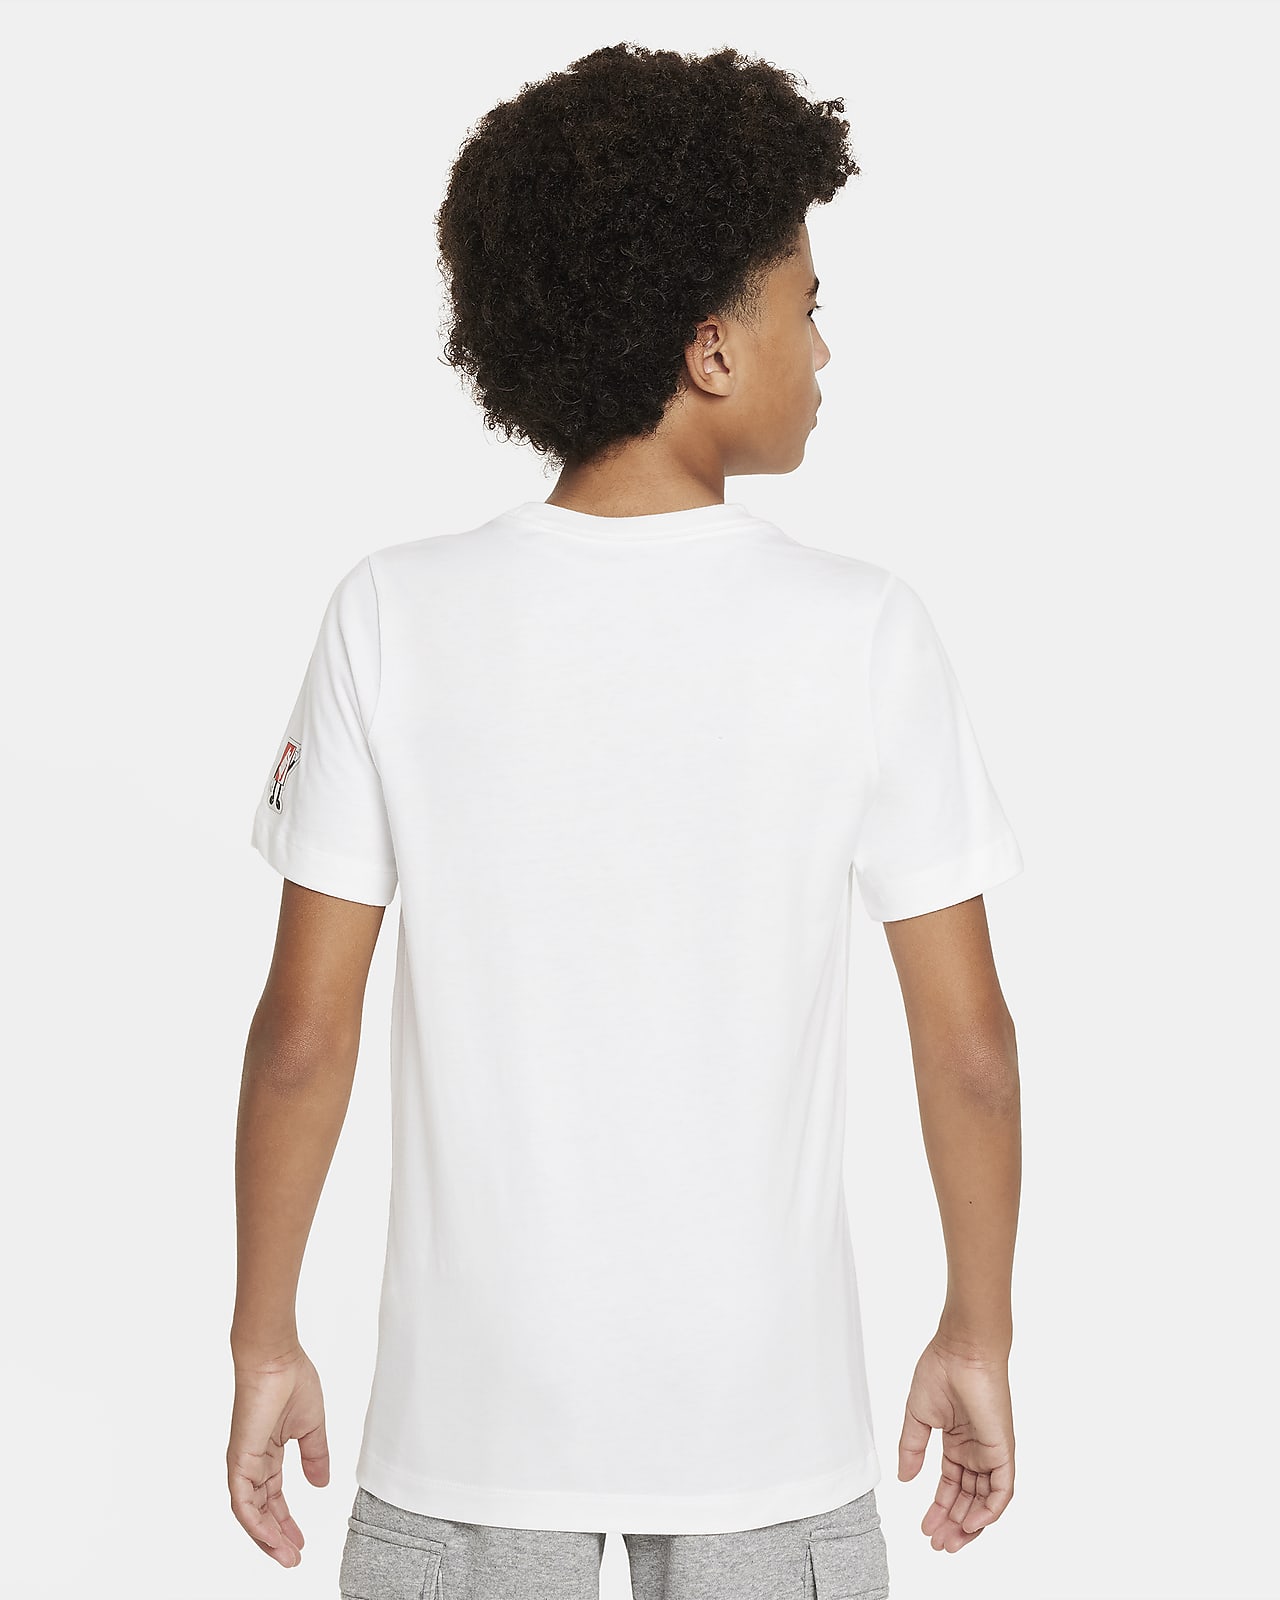 Nike Sportswear Older Kids' T-Shirt. Nike LU